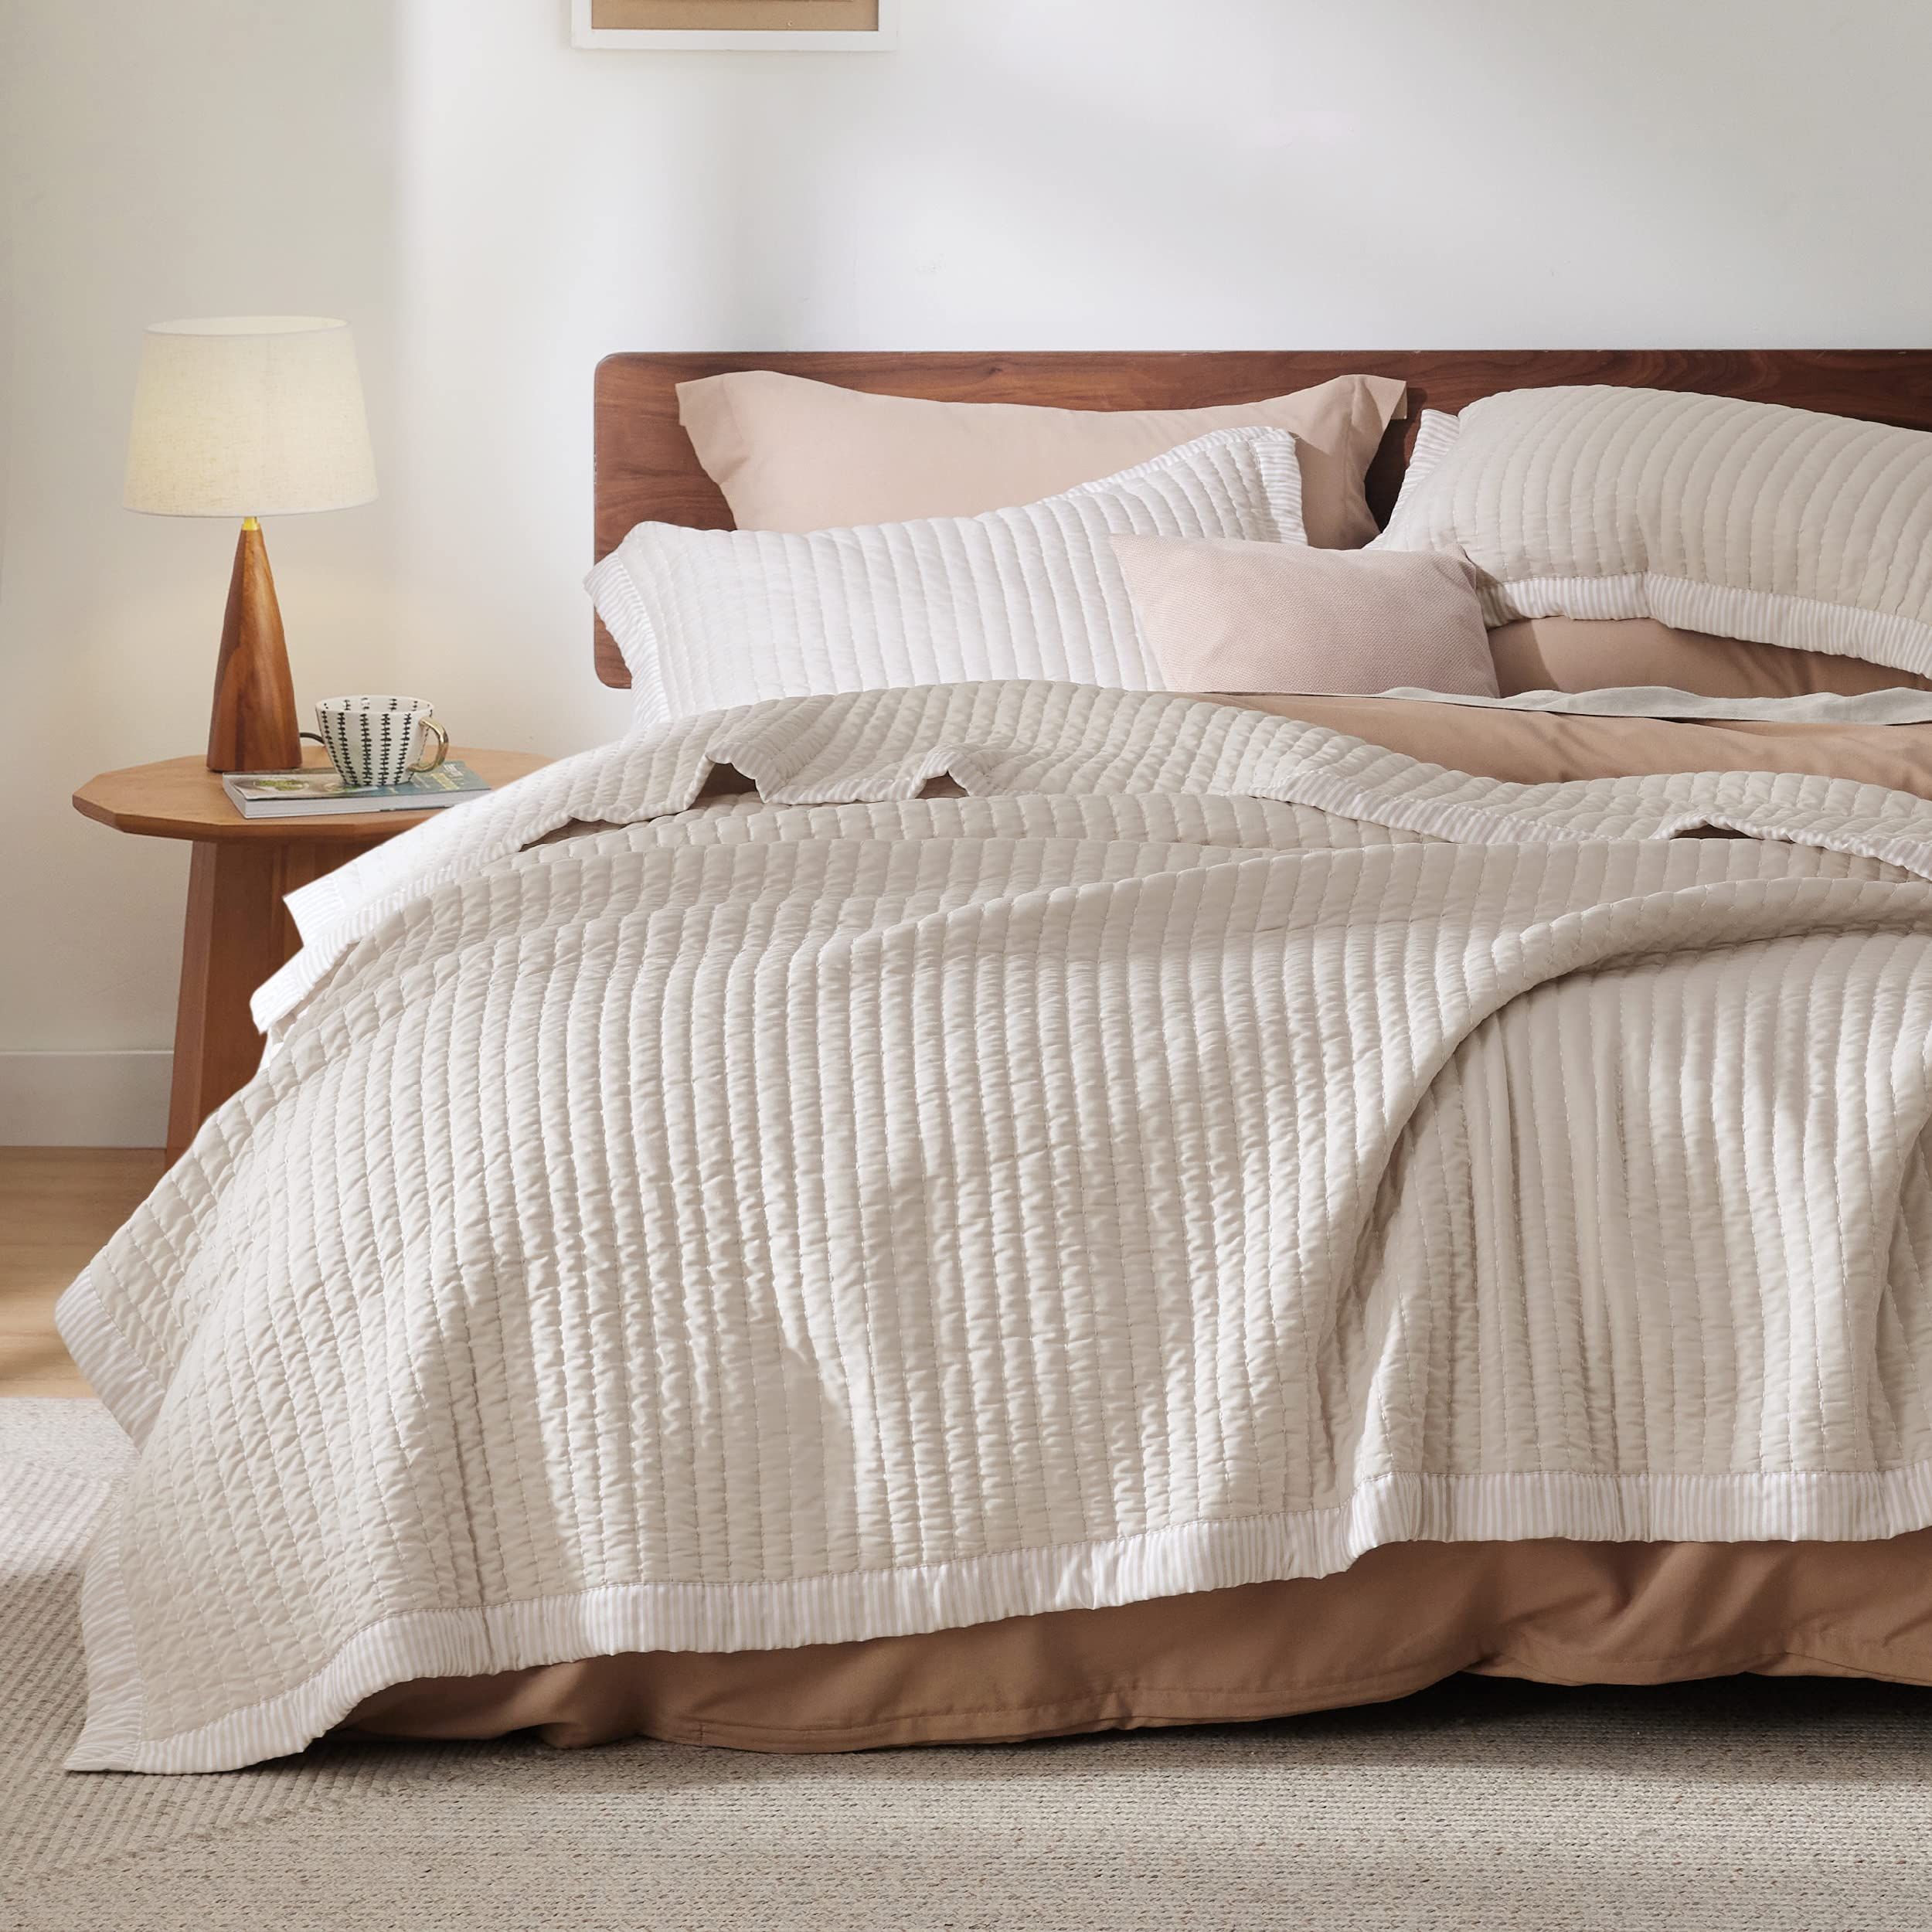 BEDSURE Linen Quilt King Size - Lightweight Soft Quilt Bedding Set for All Seasons, Bedspreads & ... | Amazon (US)